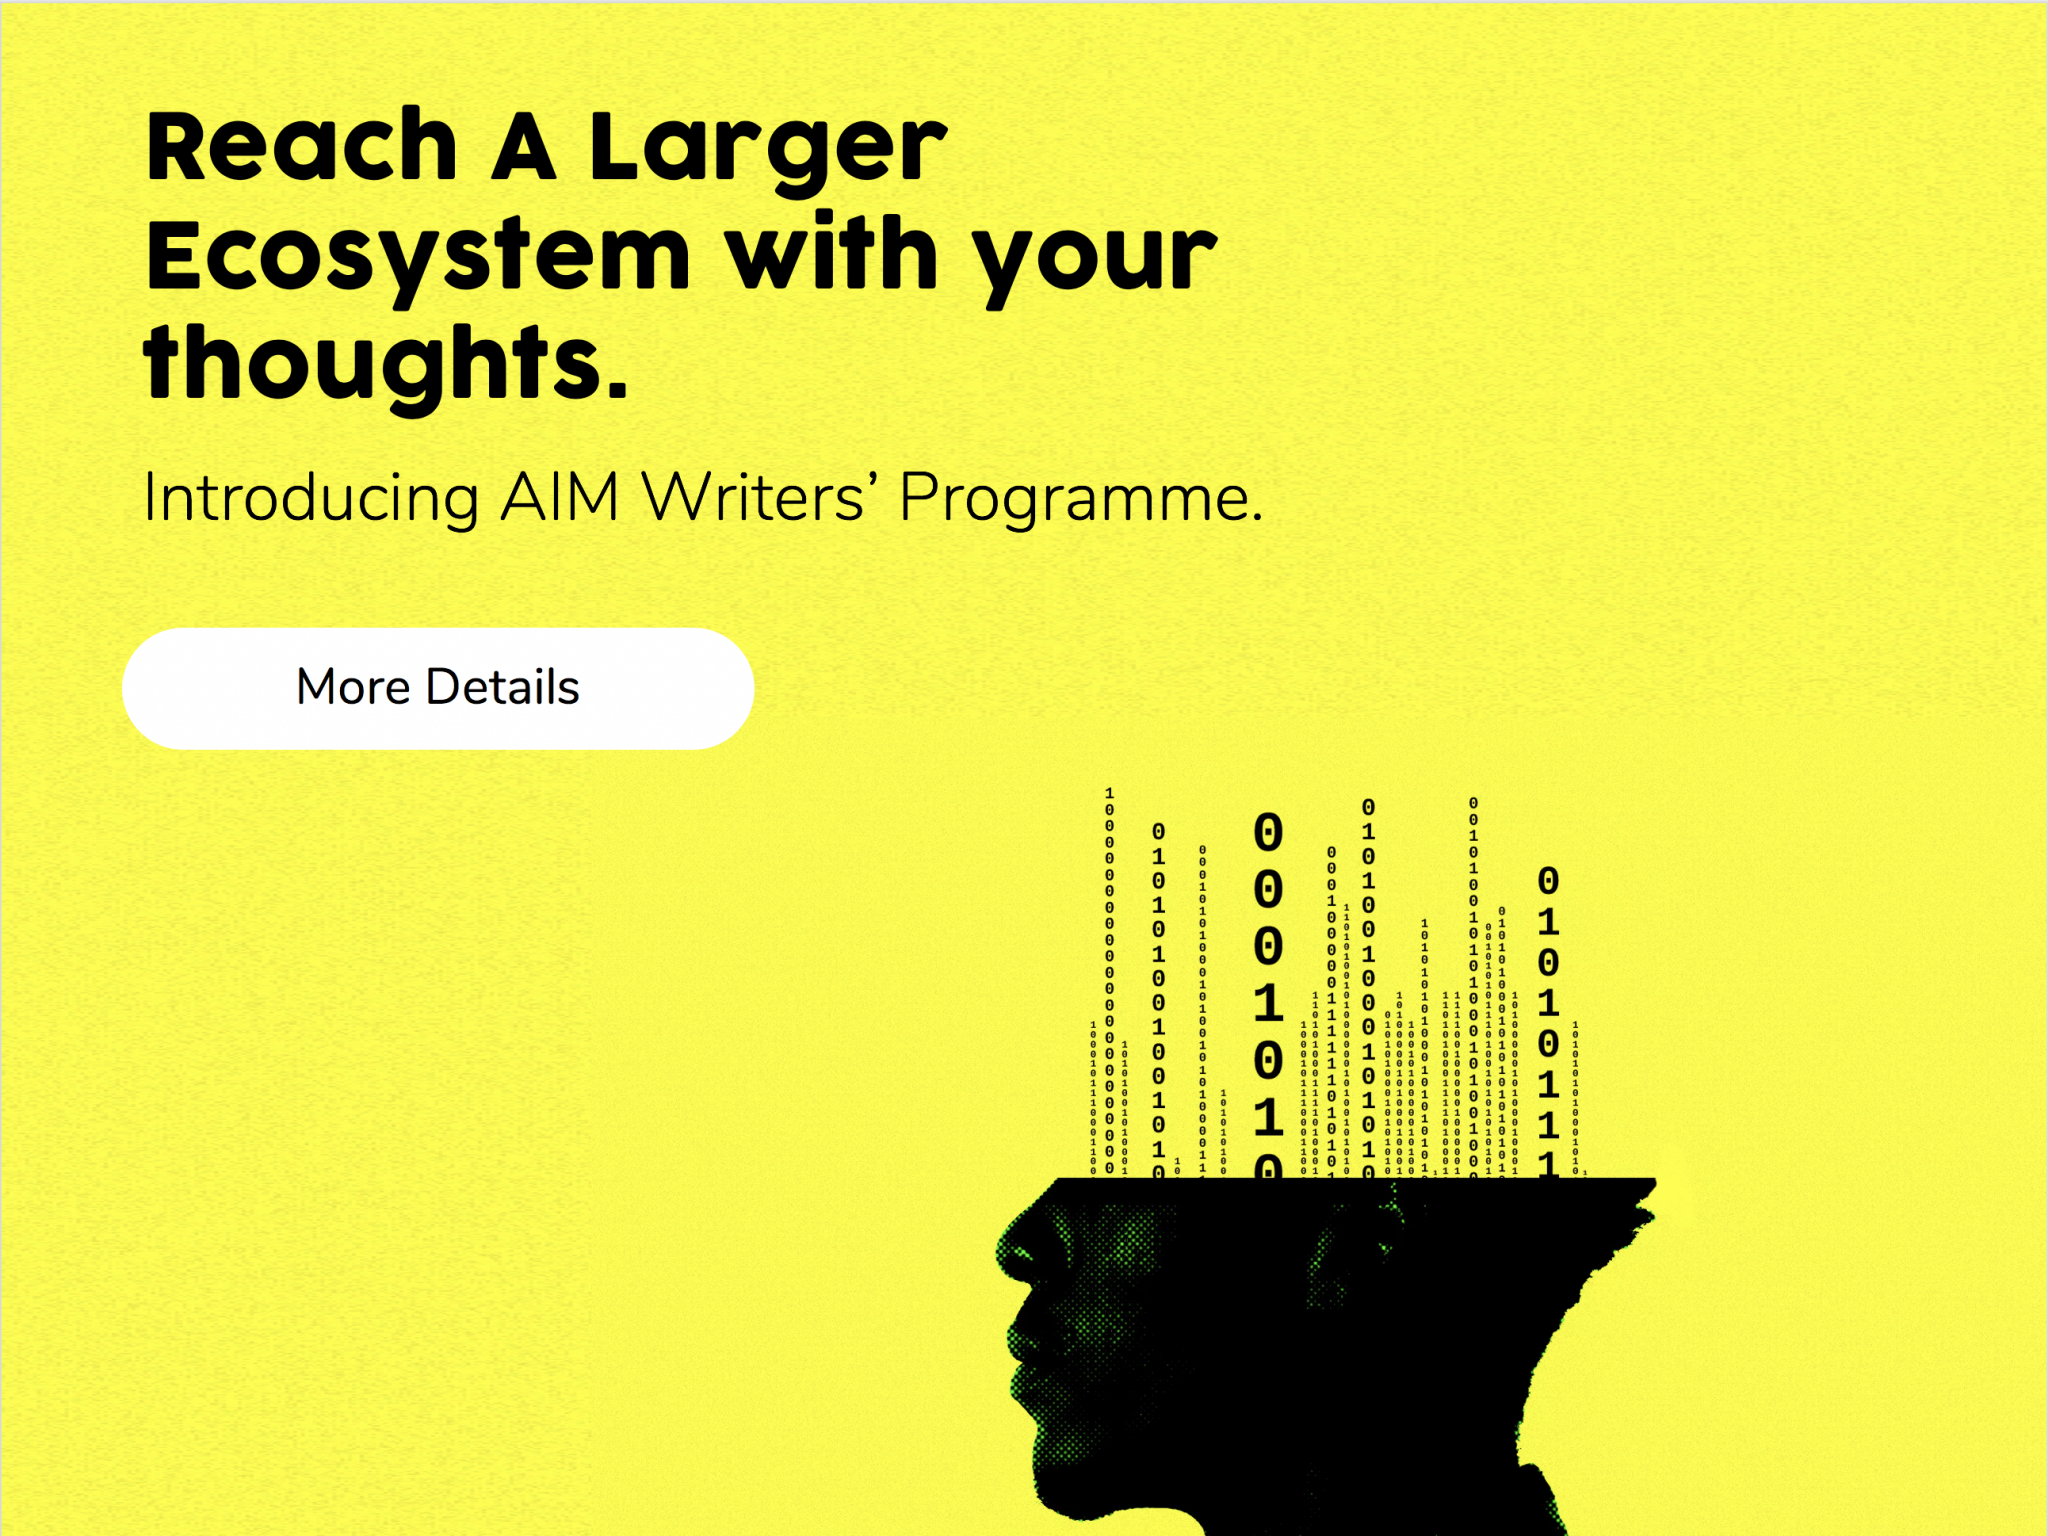 AIM Writers Programme